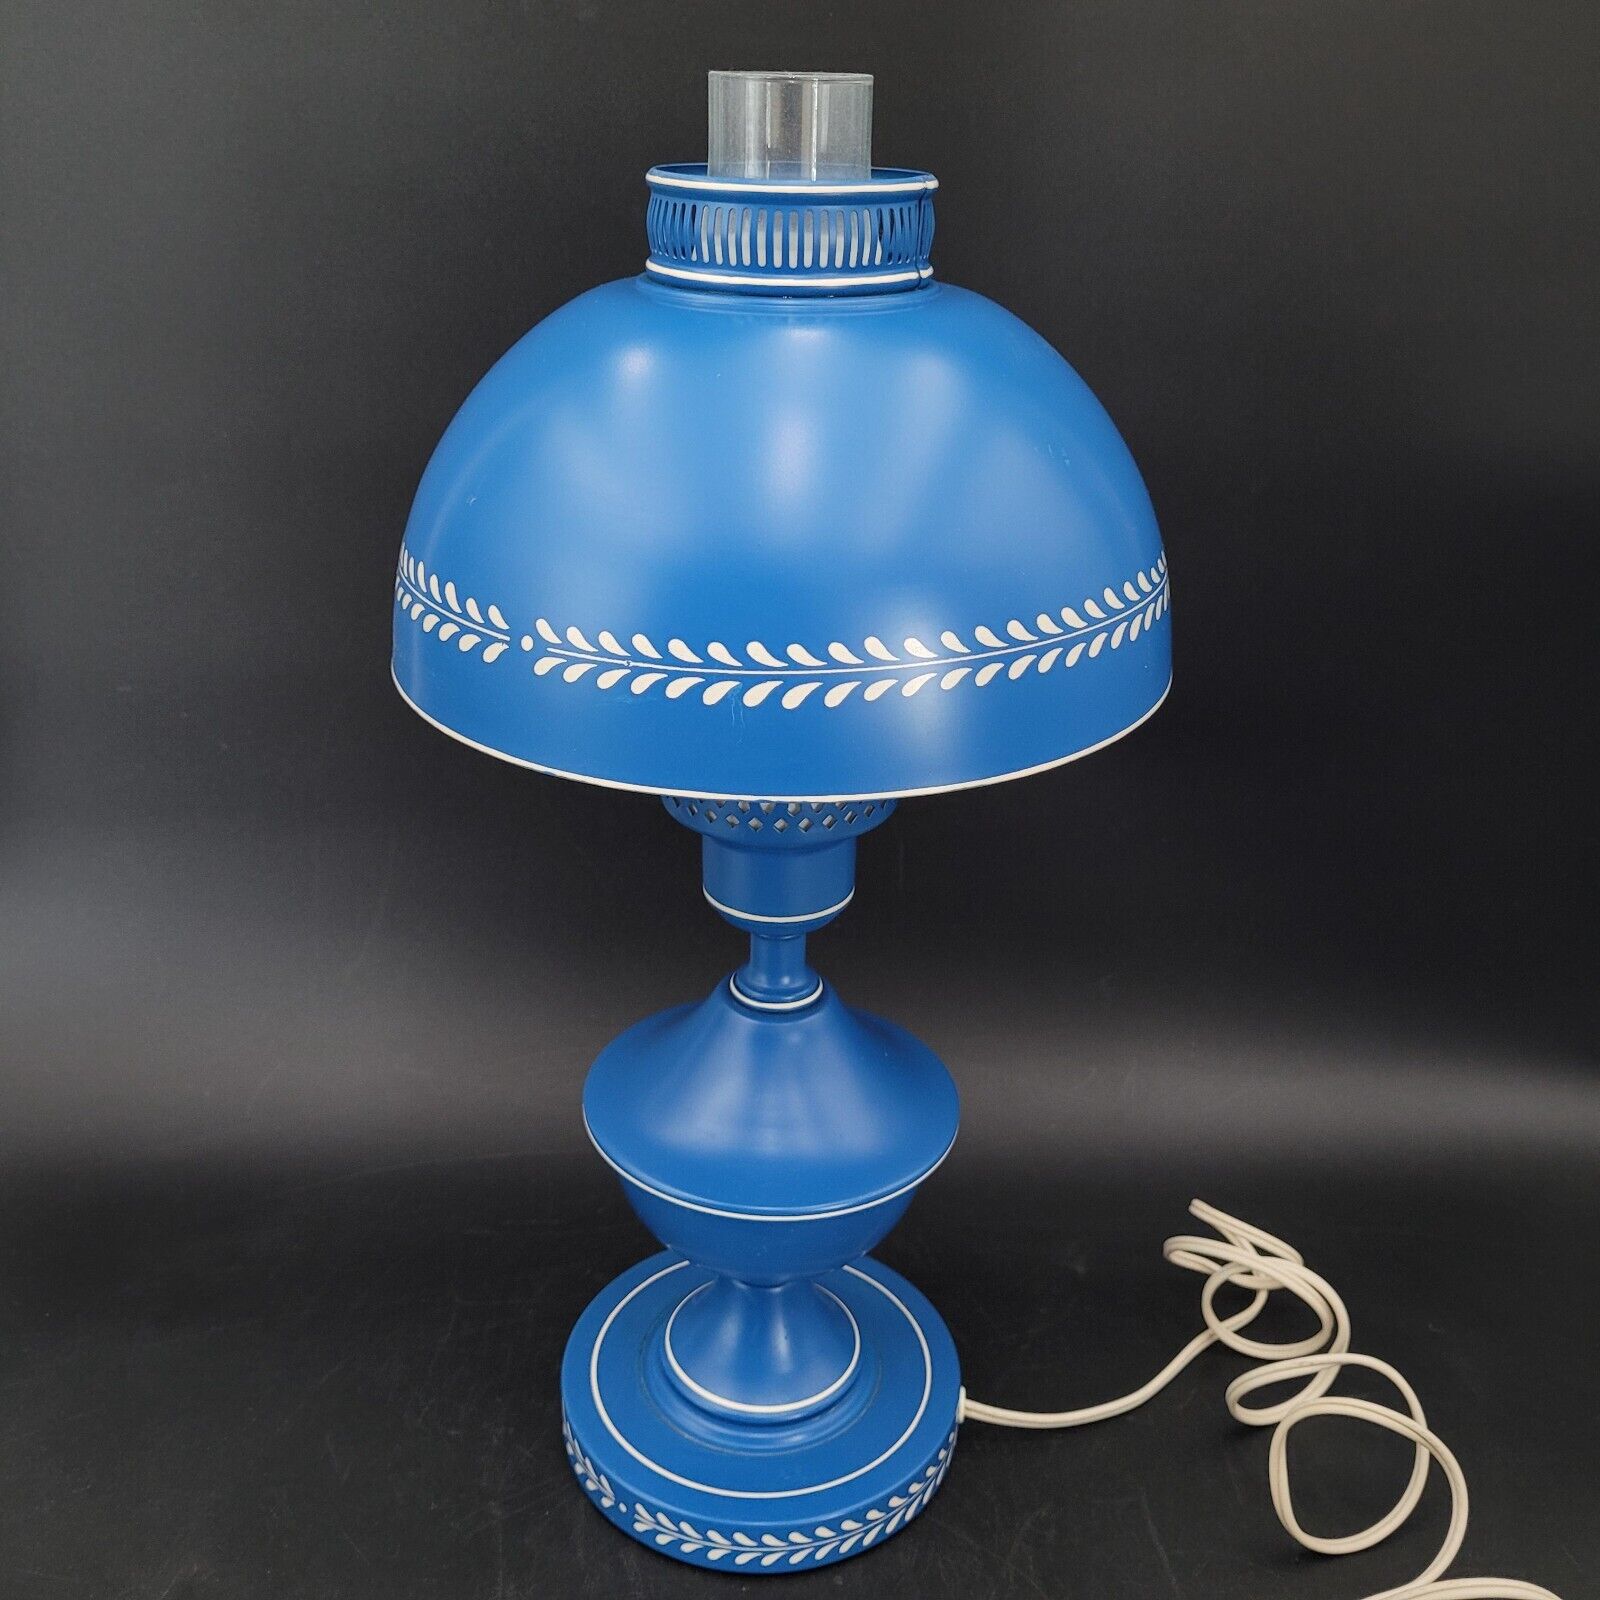 17” Vintage Toleware Blue White Metal Table Lamp 60s MCM Desk Nightstand Light